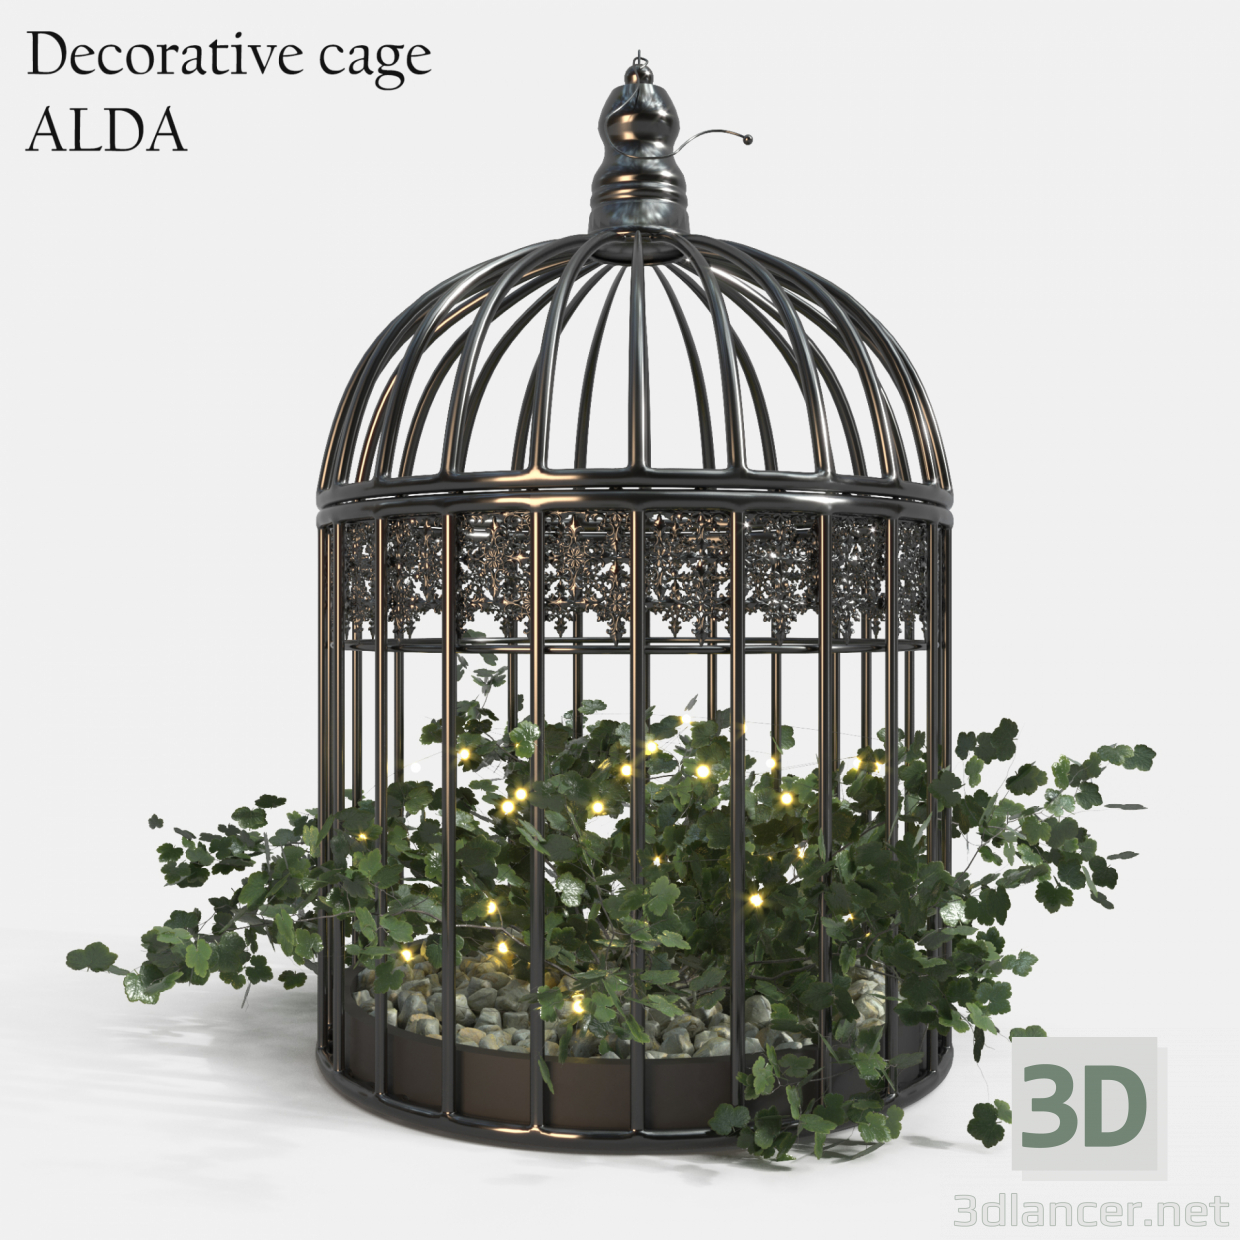 3d Decorative cage model buy - render